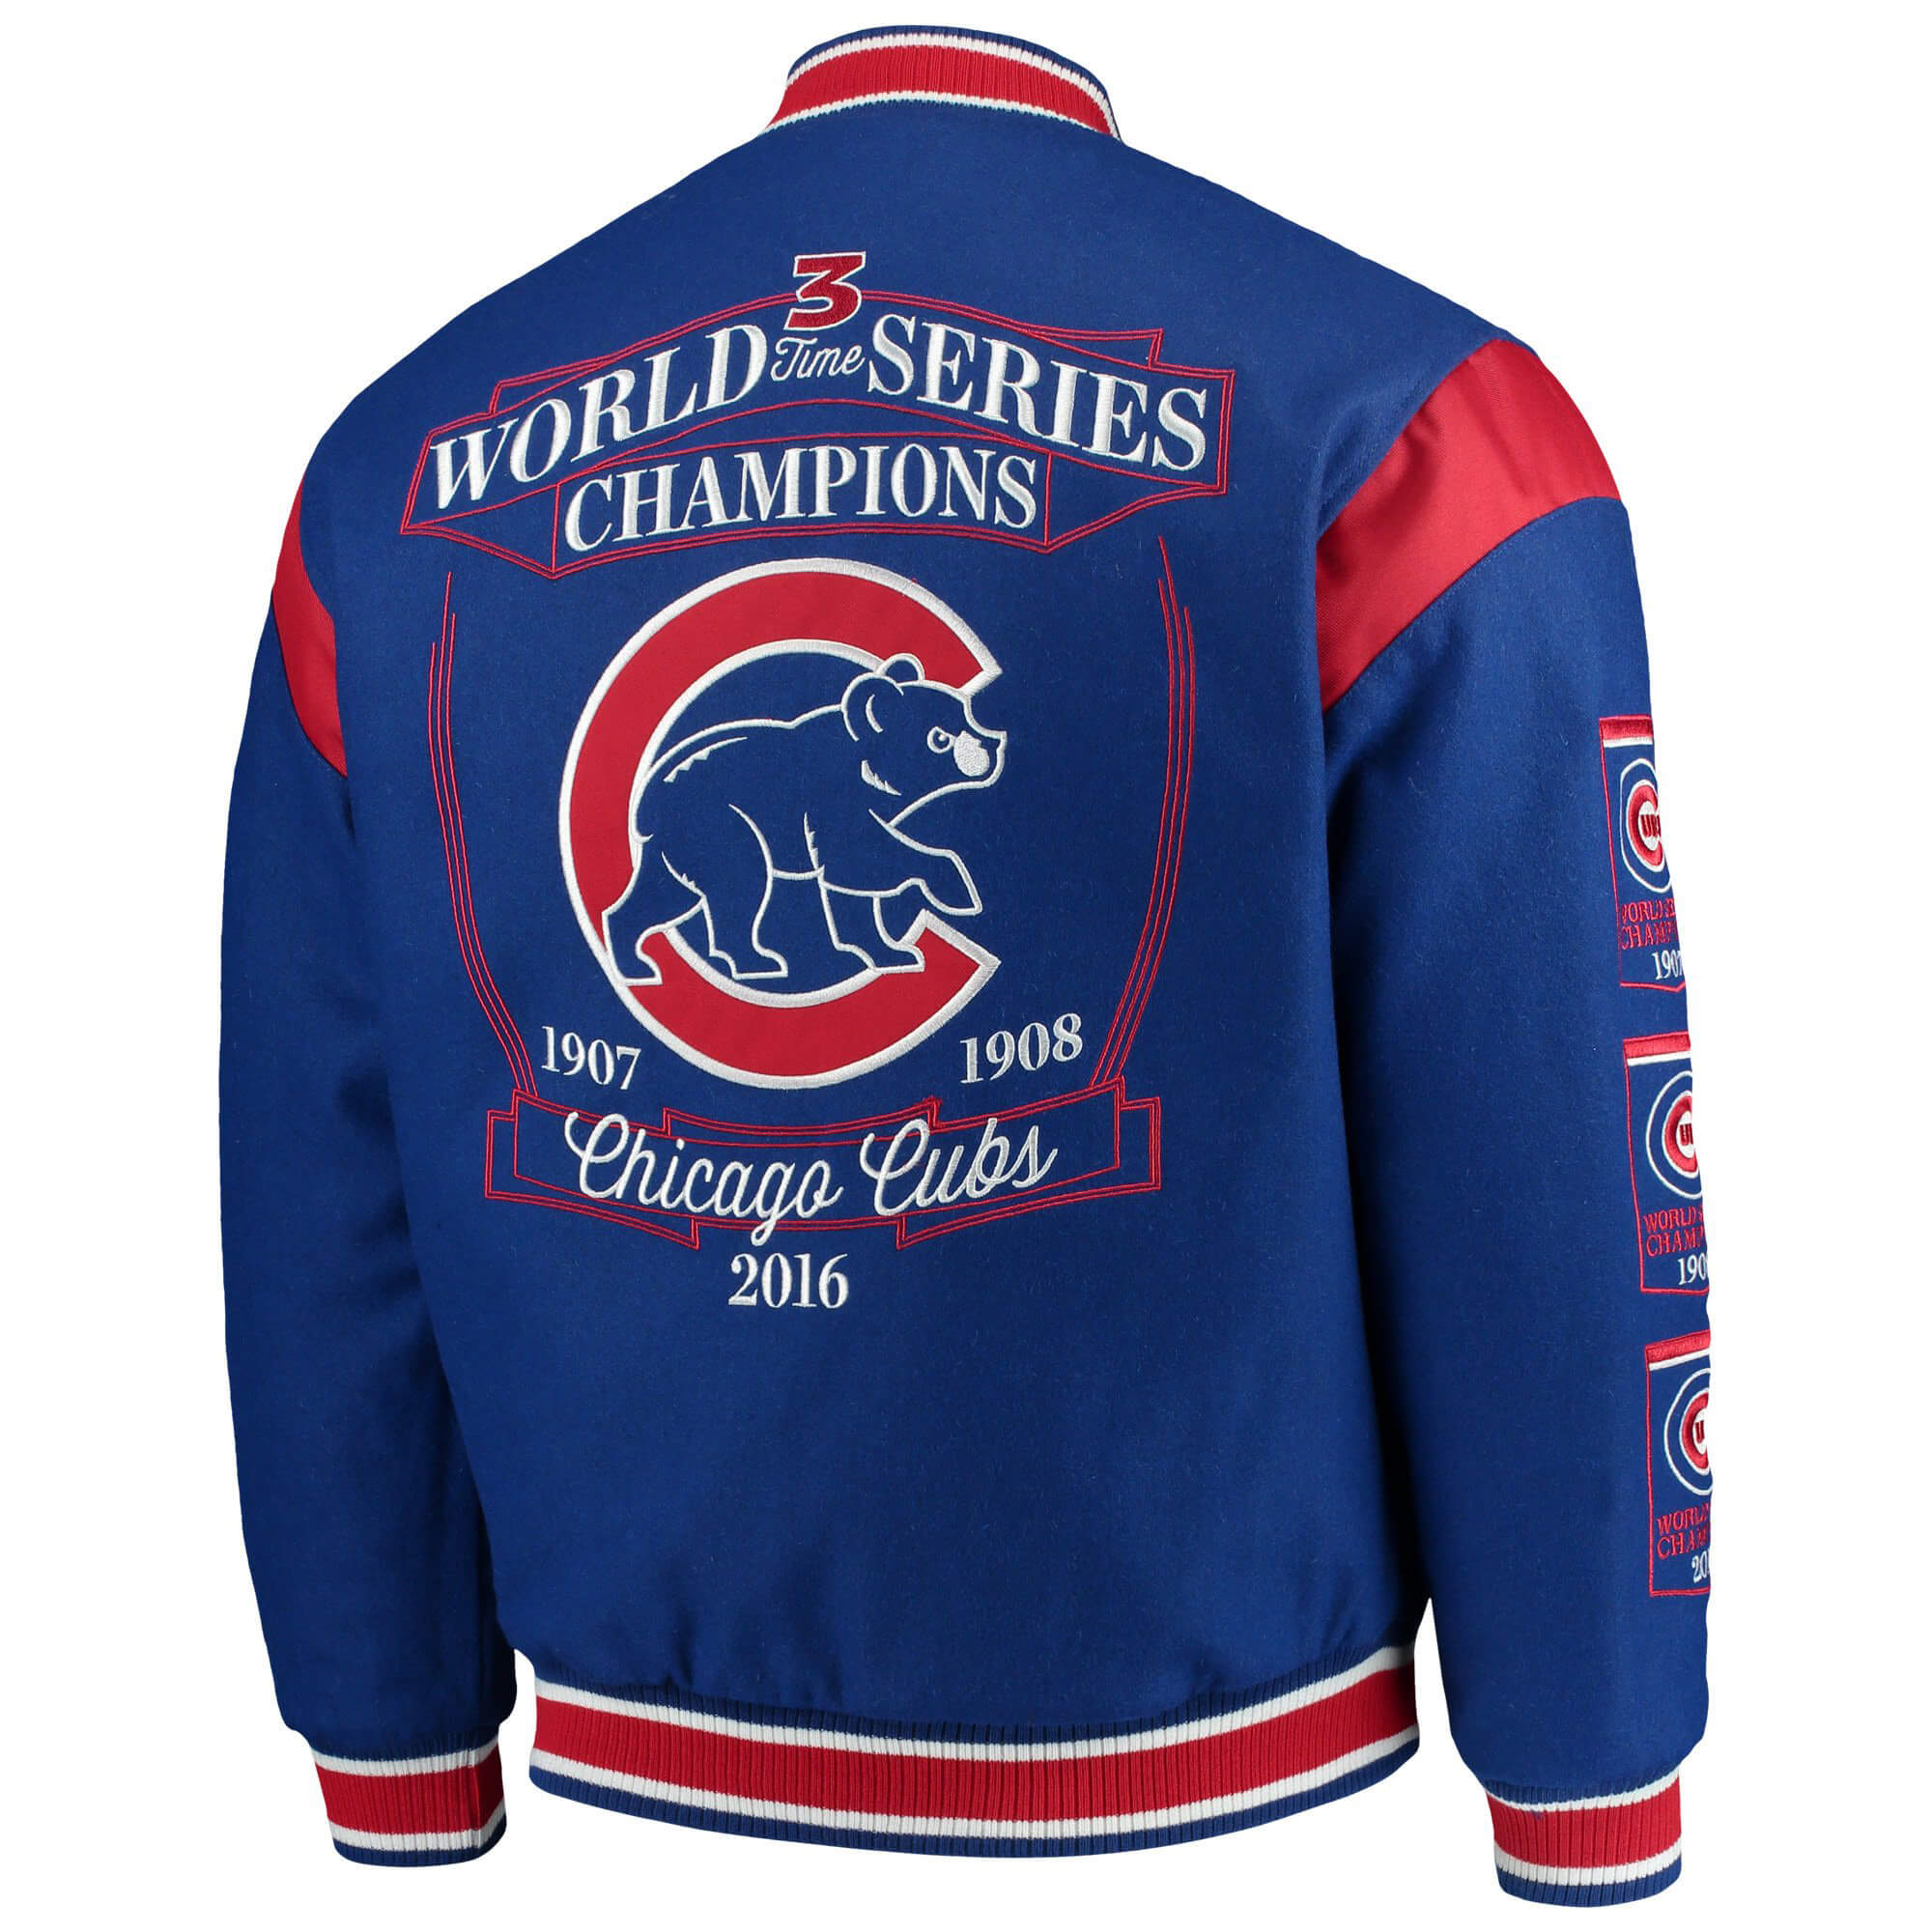 MLB Genuine Merchandise Chicago Cubs World Series Champions 2016 Ladies Sz  S Tee